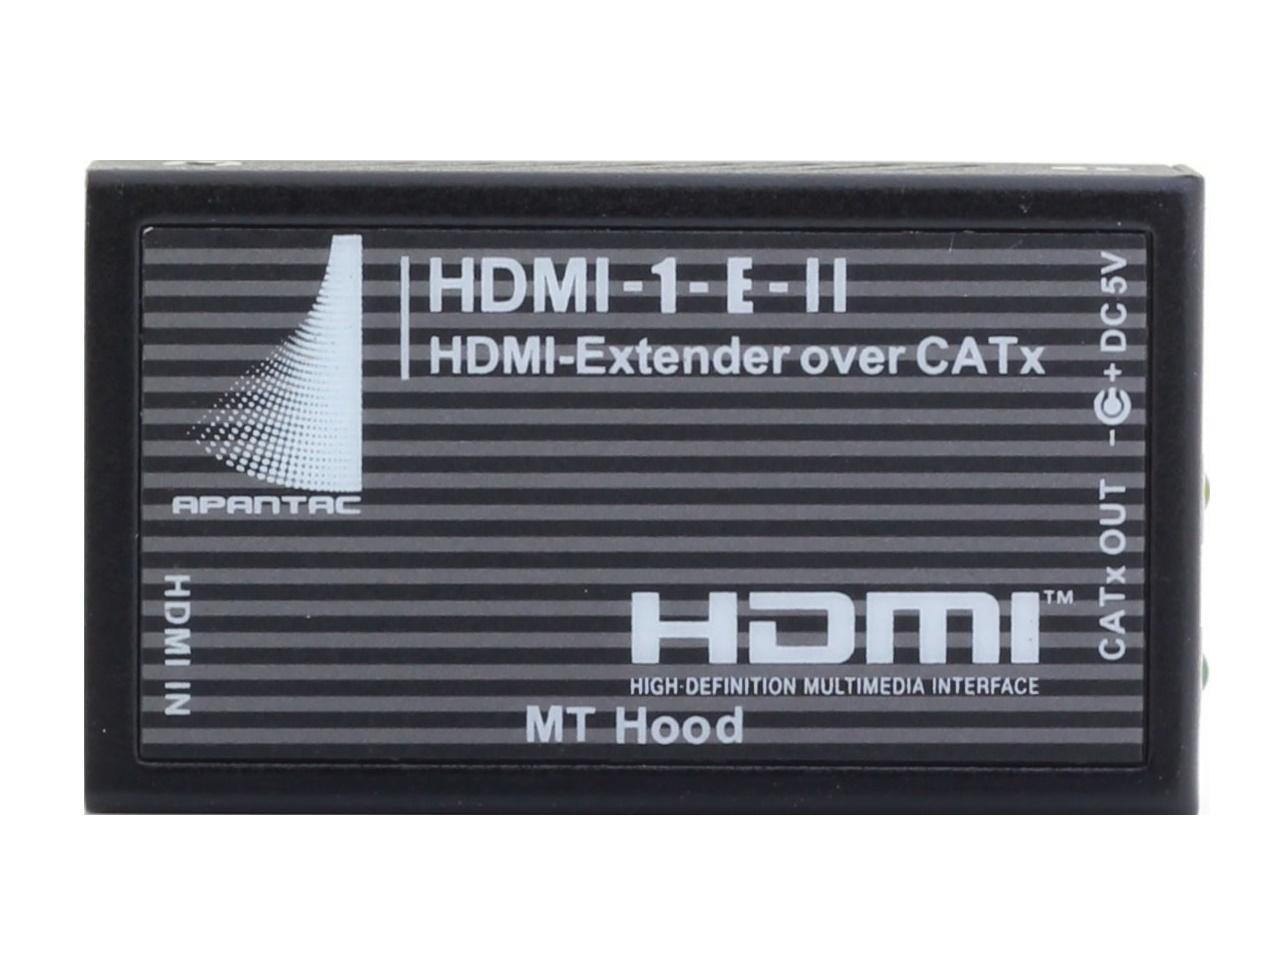 Apantac HDMI-1-E-II HDMI Extender over CAT6 up to 150 feet/45m/1920x1080p